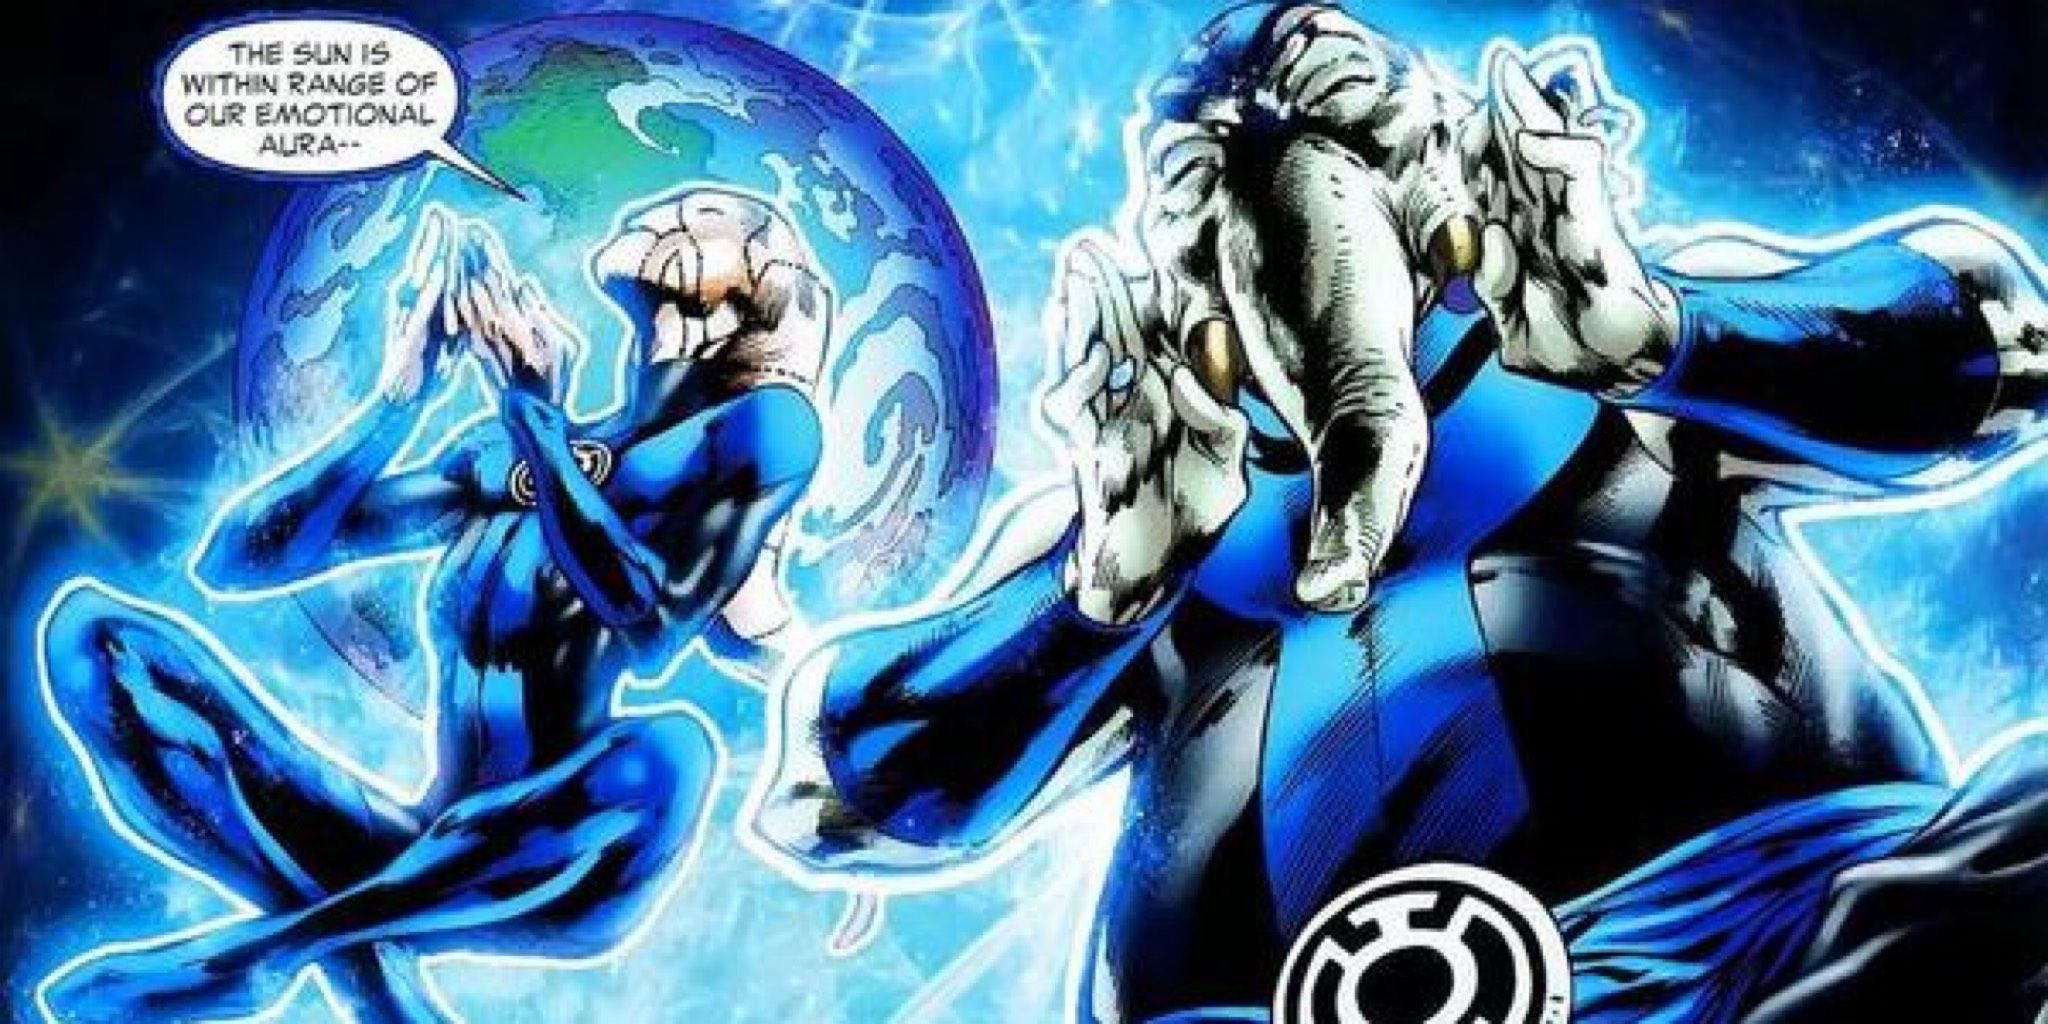 An image of Blue Lanterns meditating in DC Comics